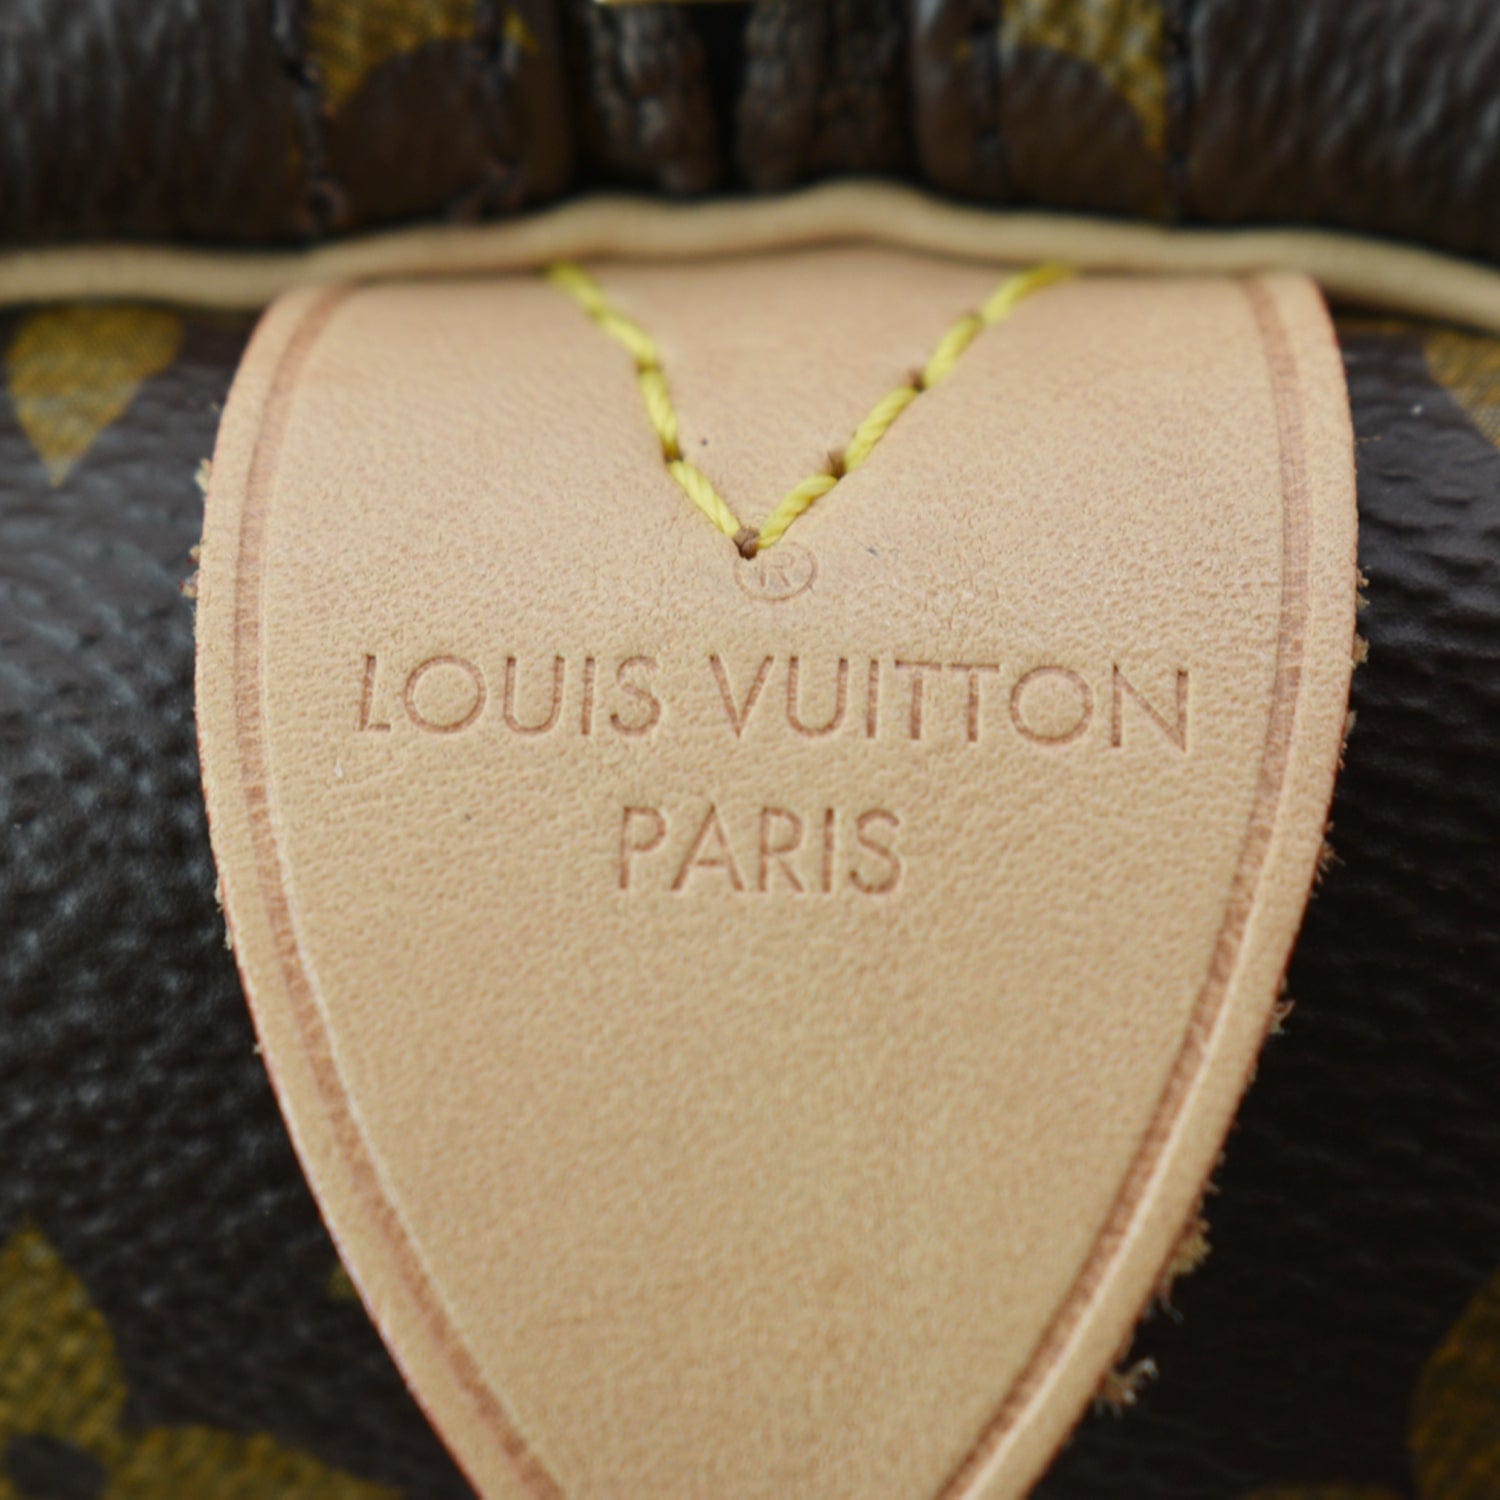 Louis Vuitton Keepall Travel bag 355602